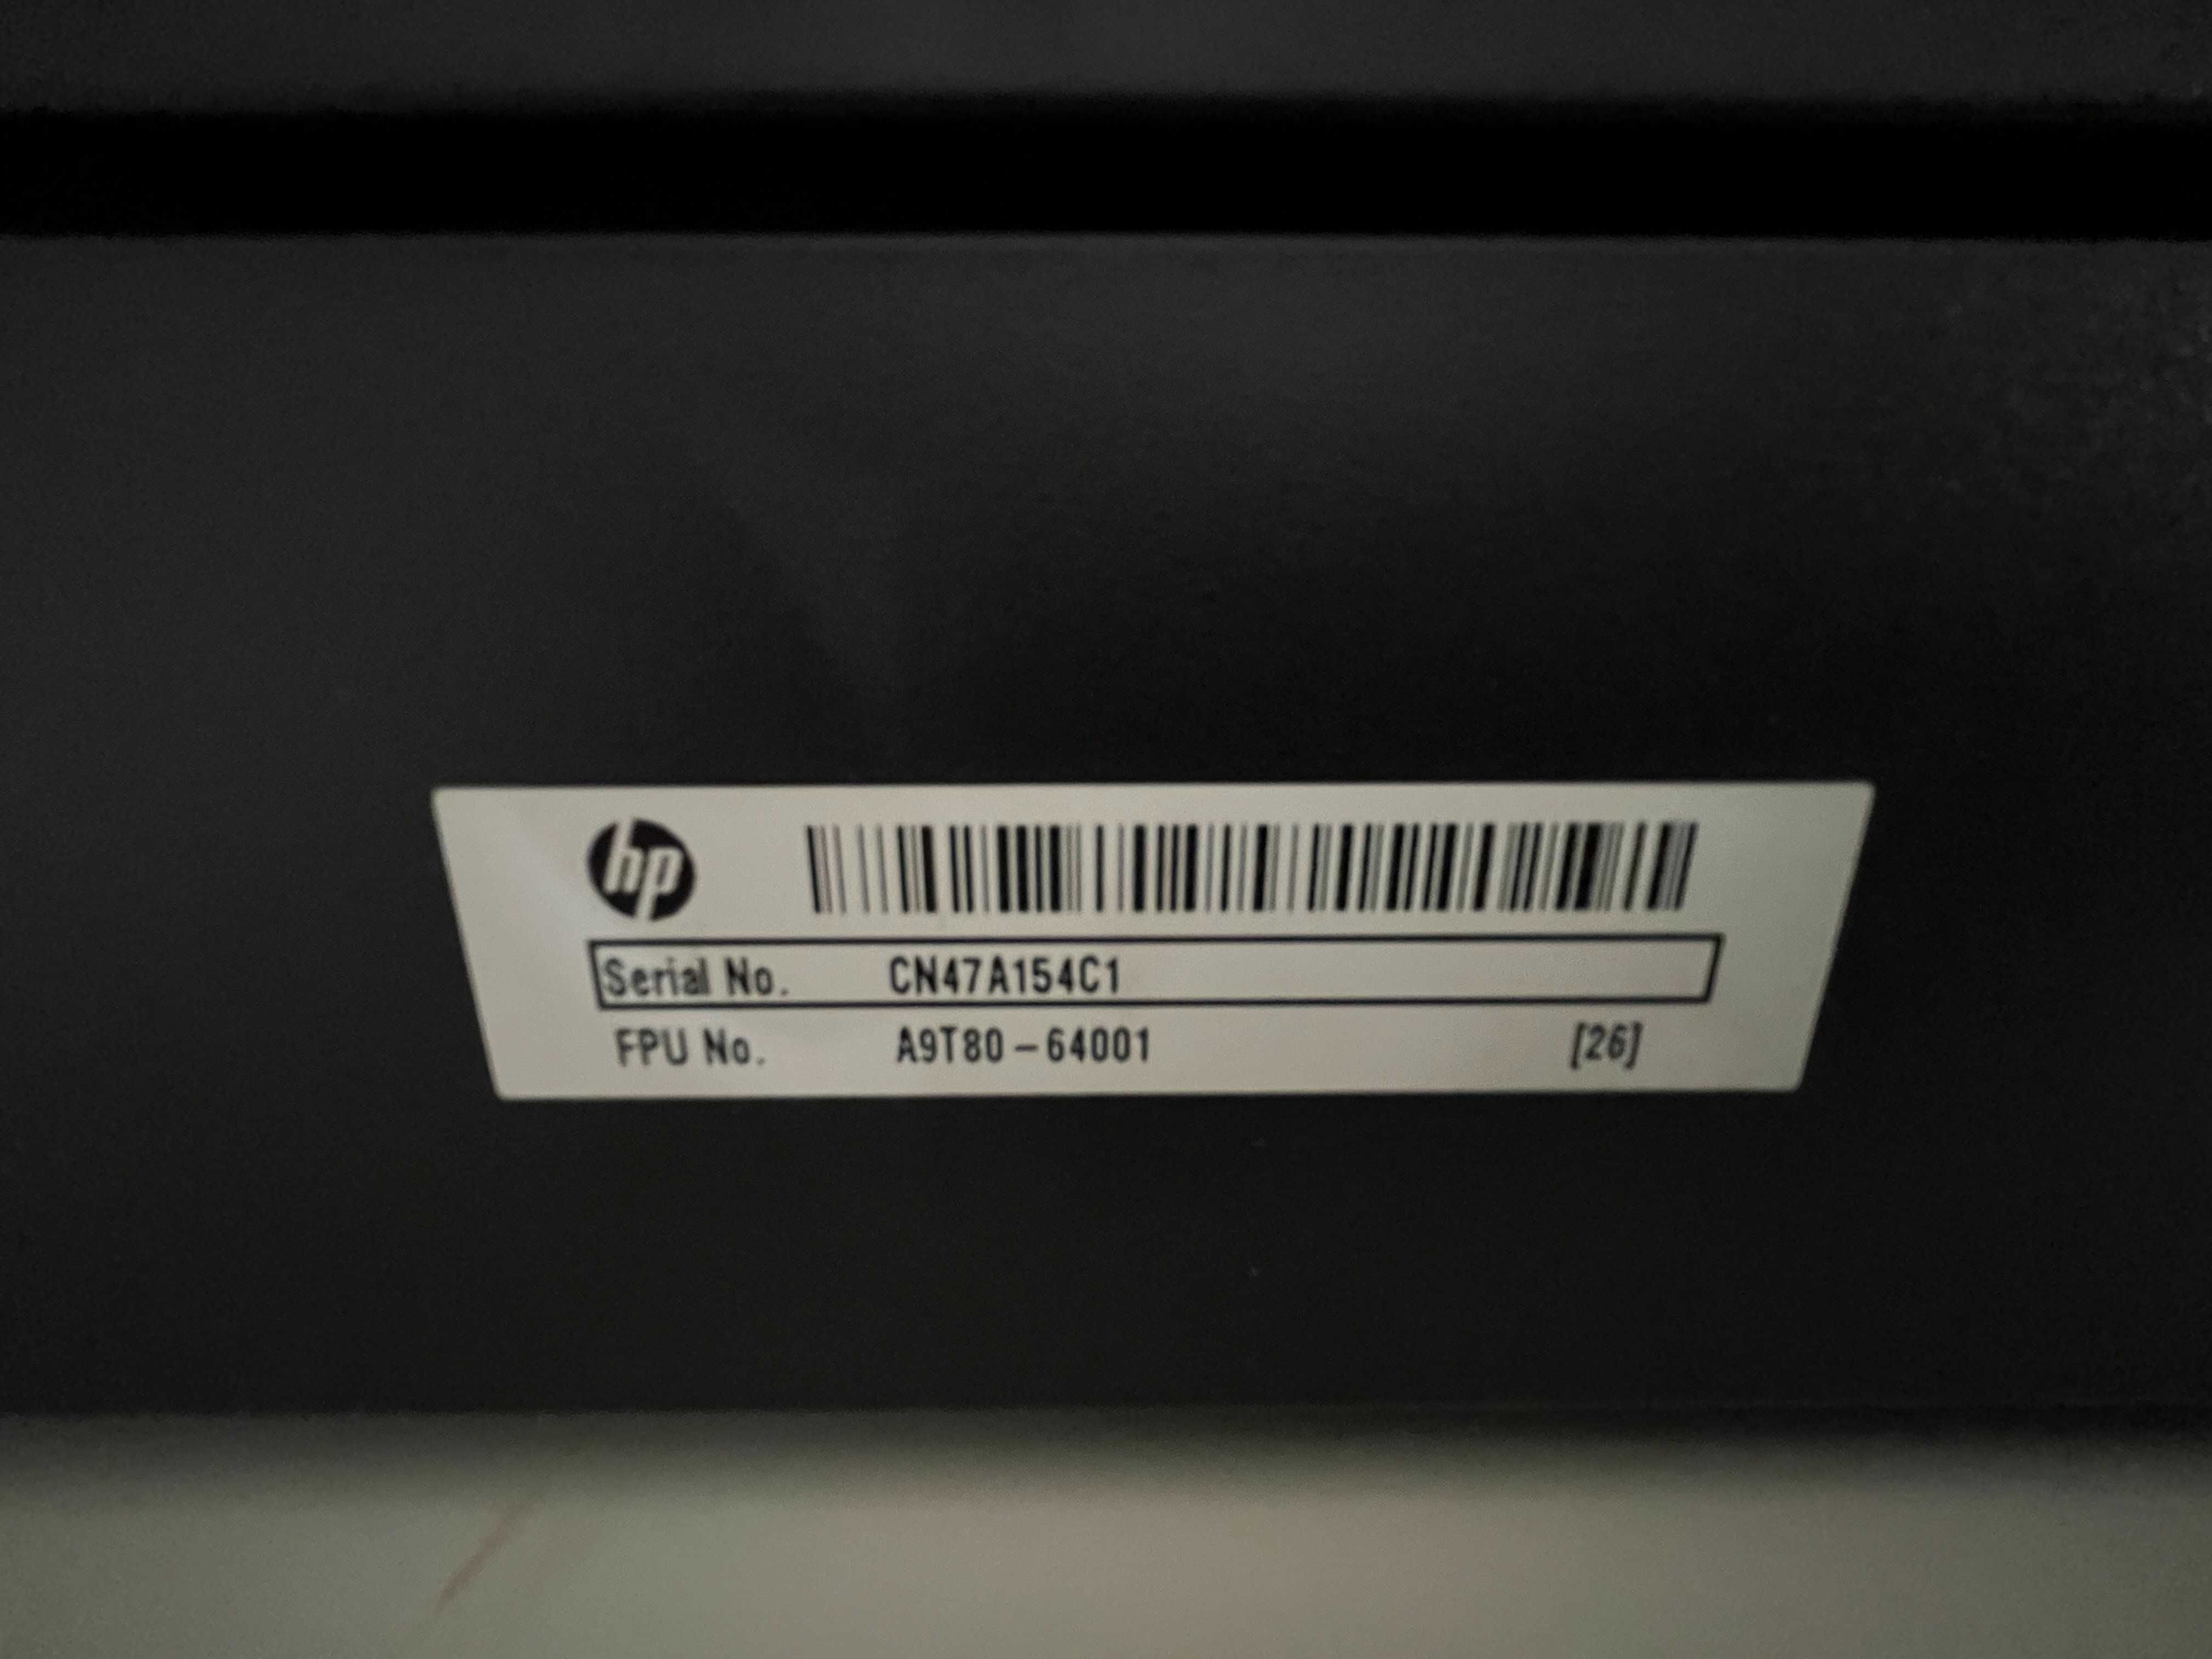 Inpressora HP Envy 4520 All-in-One